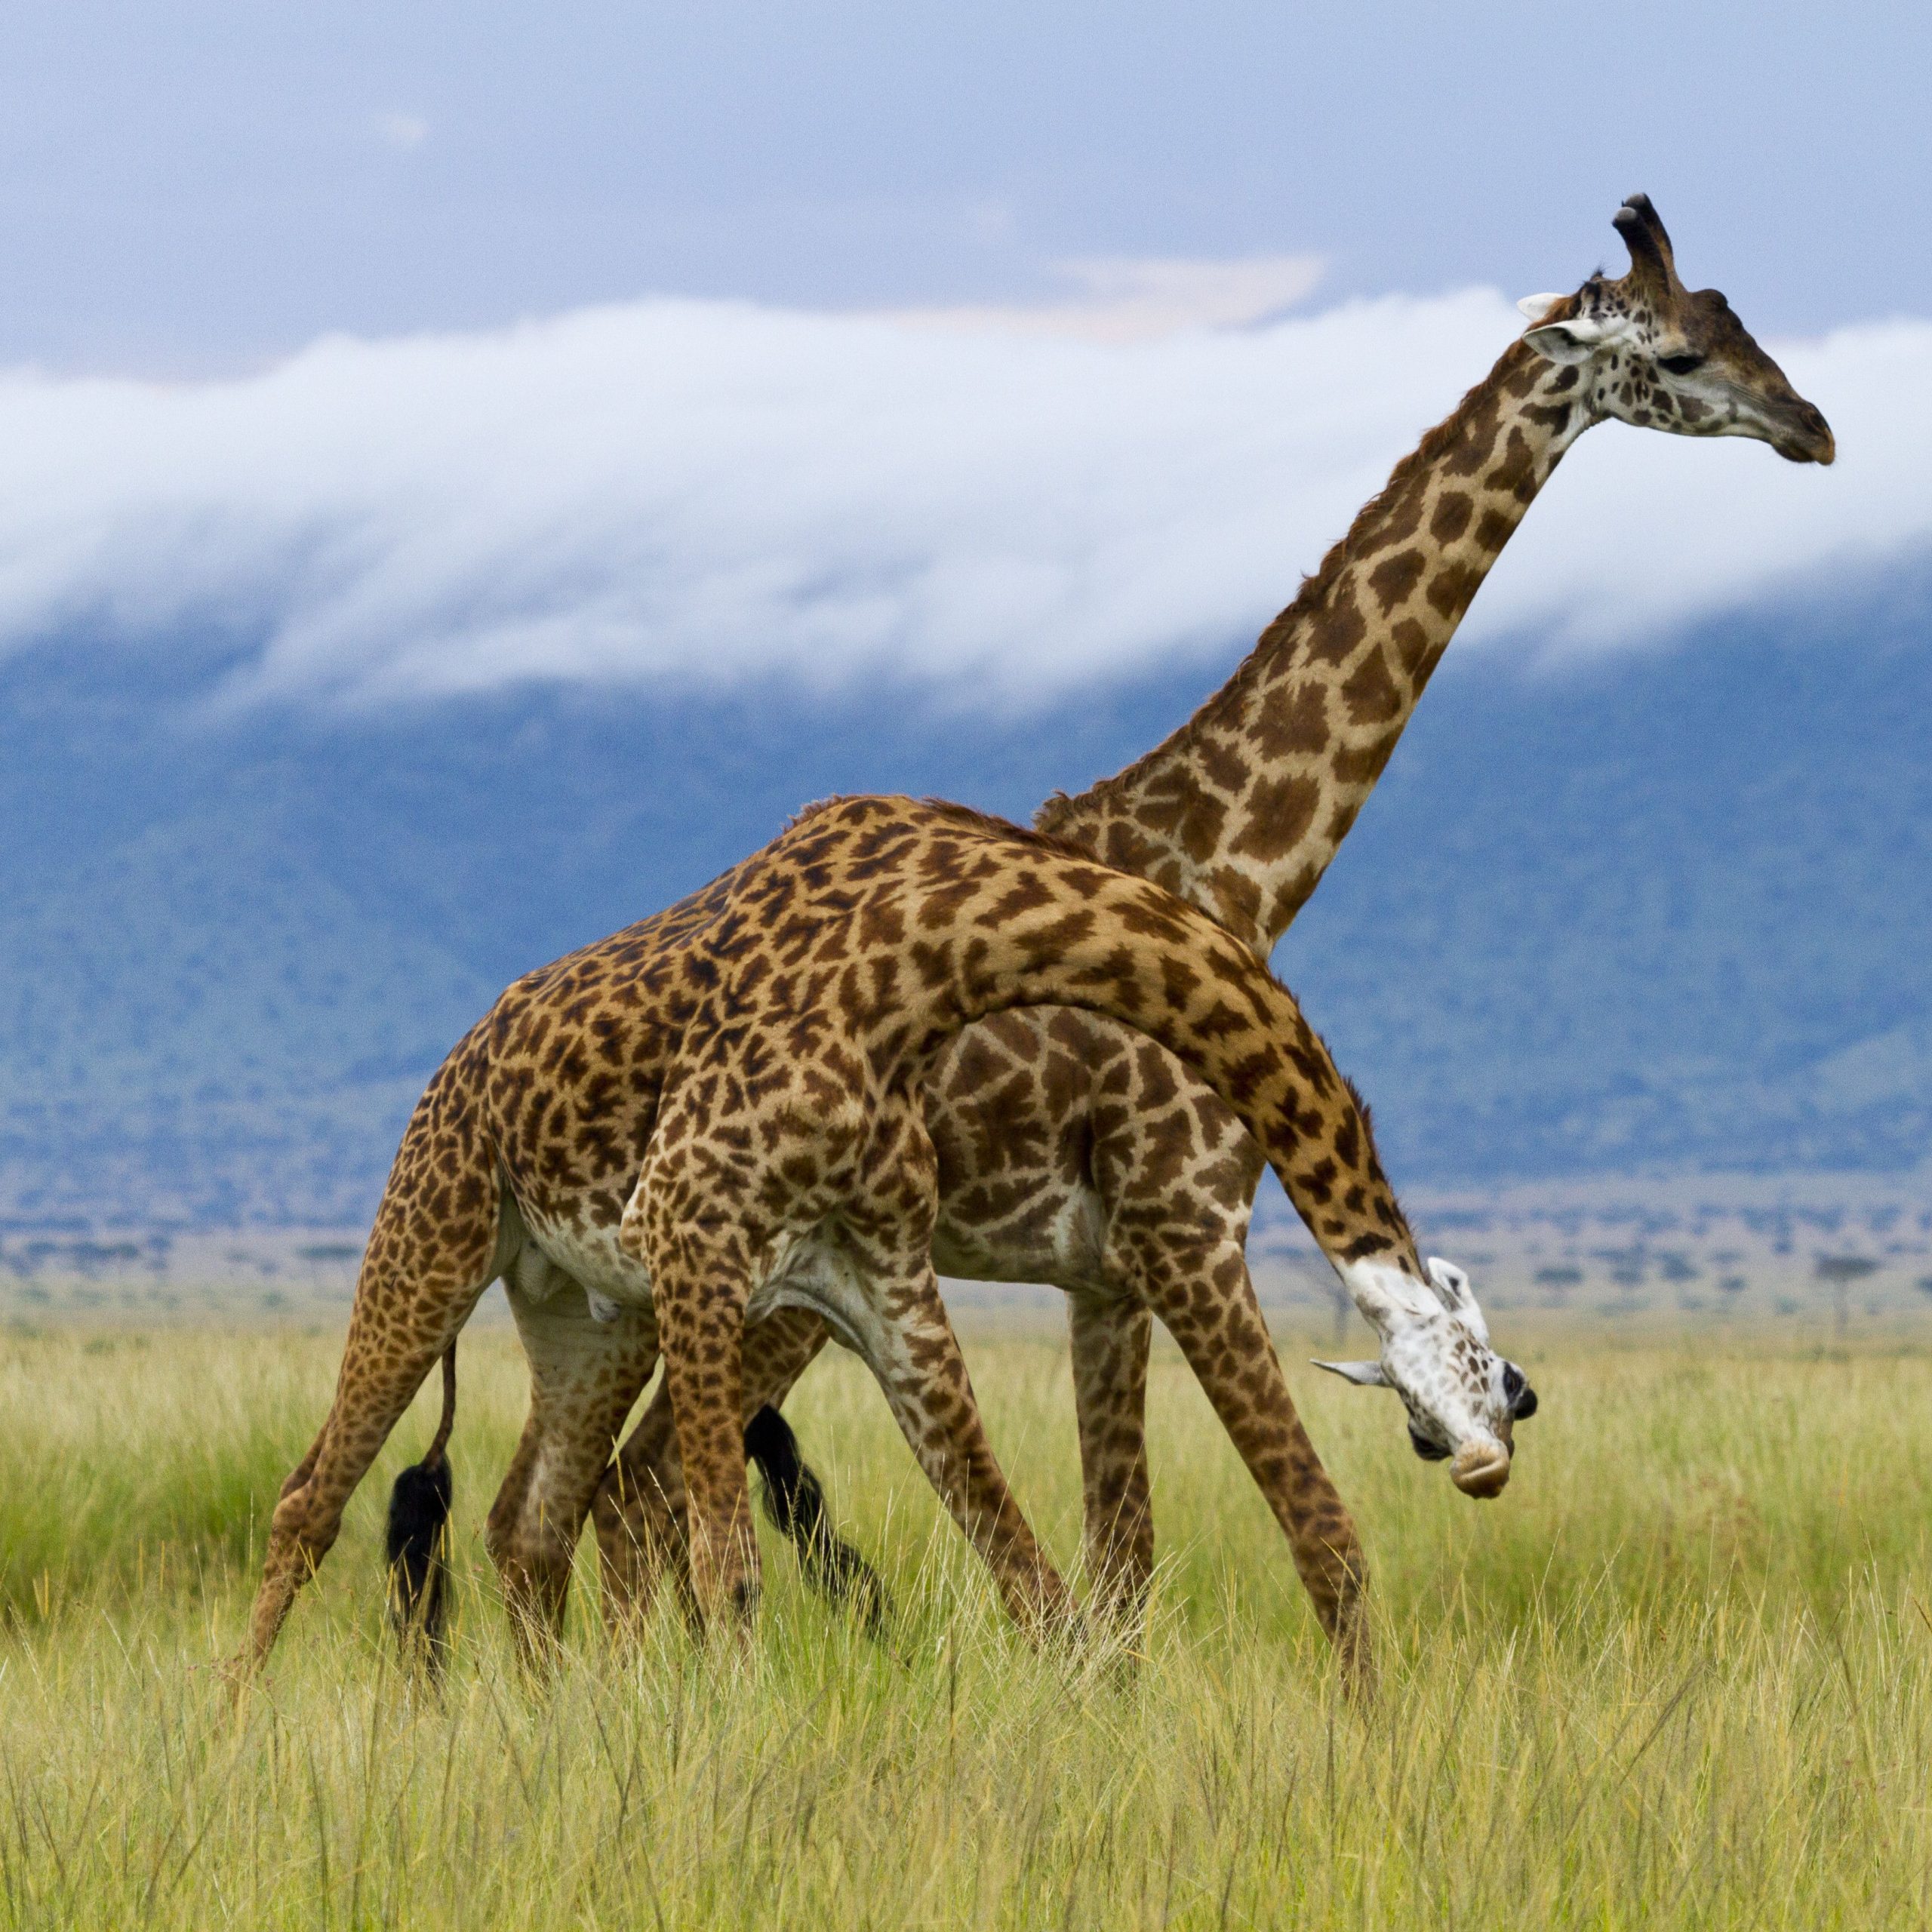 Facts about Giraffes